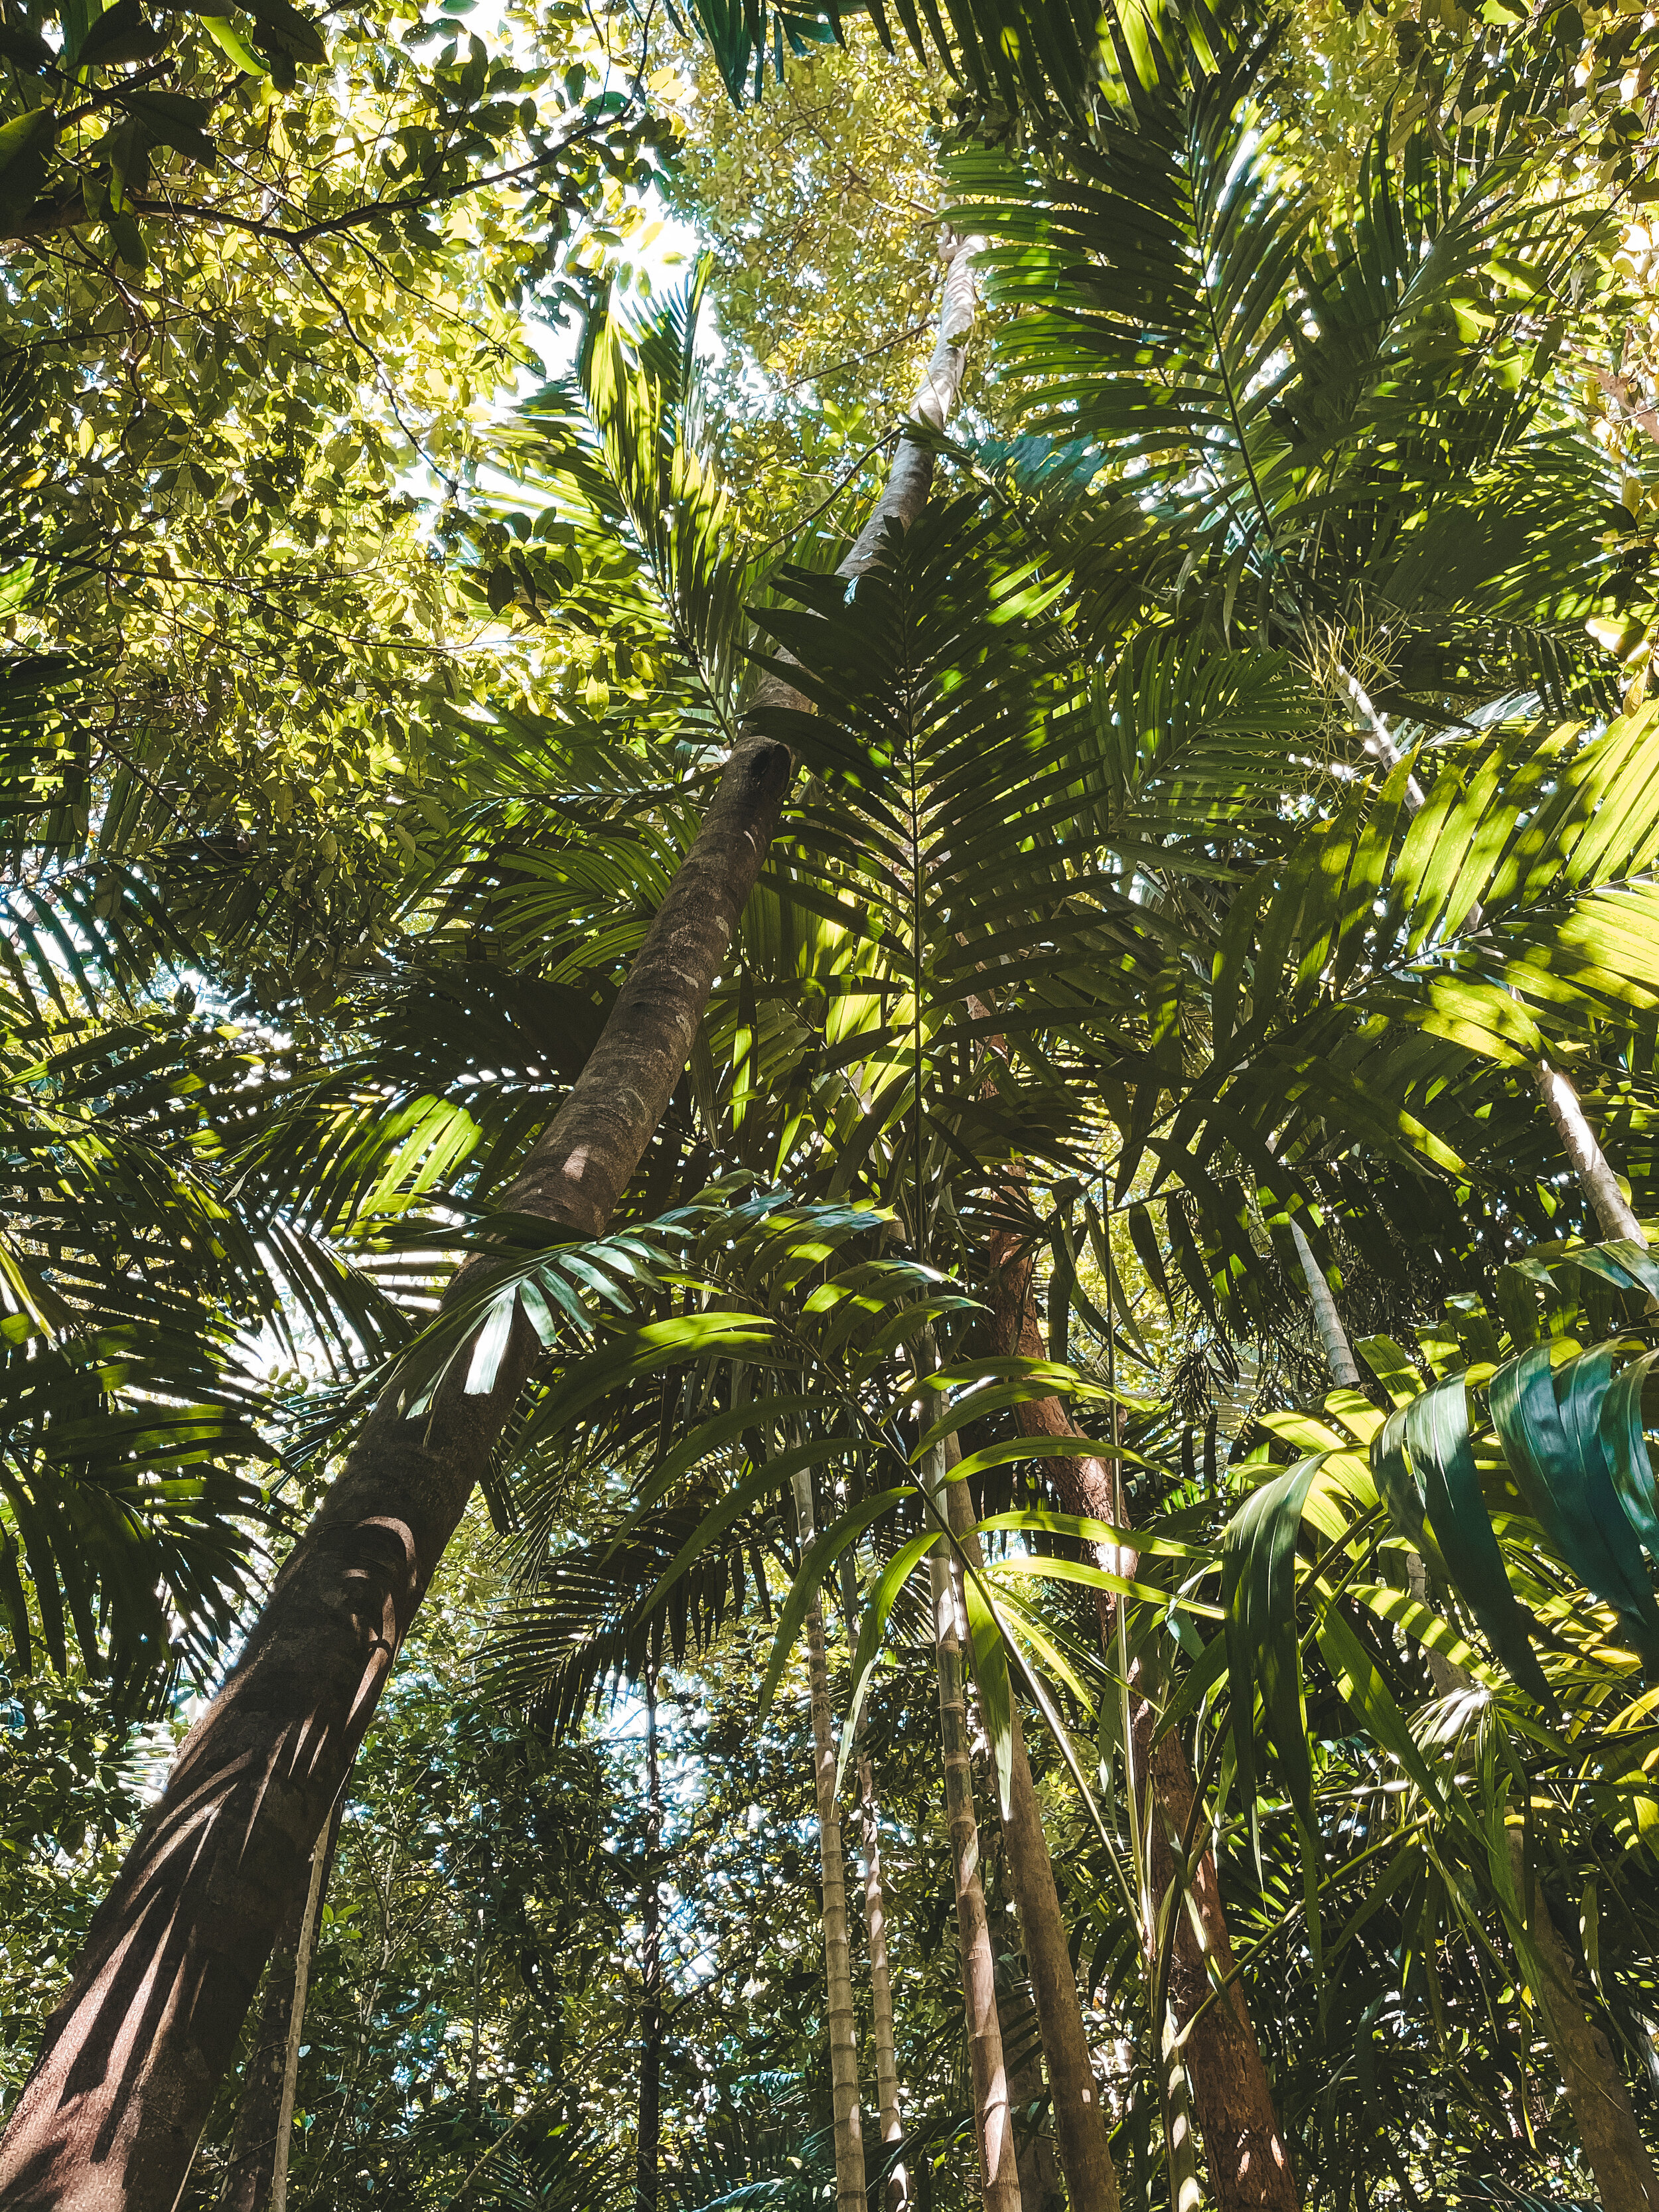 Palms &amp; Sunshine - Hinchinbrook Island - Tropical North Queensland (QLD) - Australia